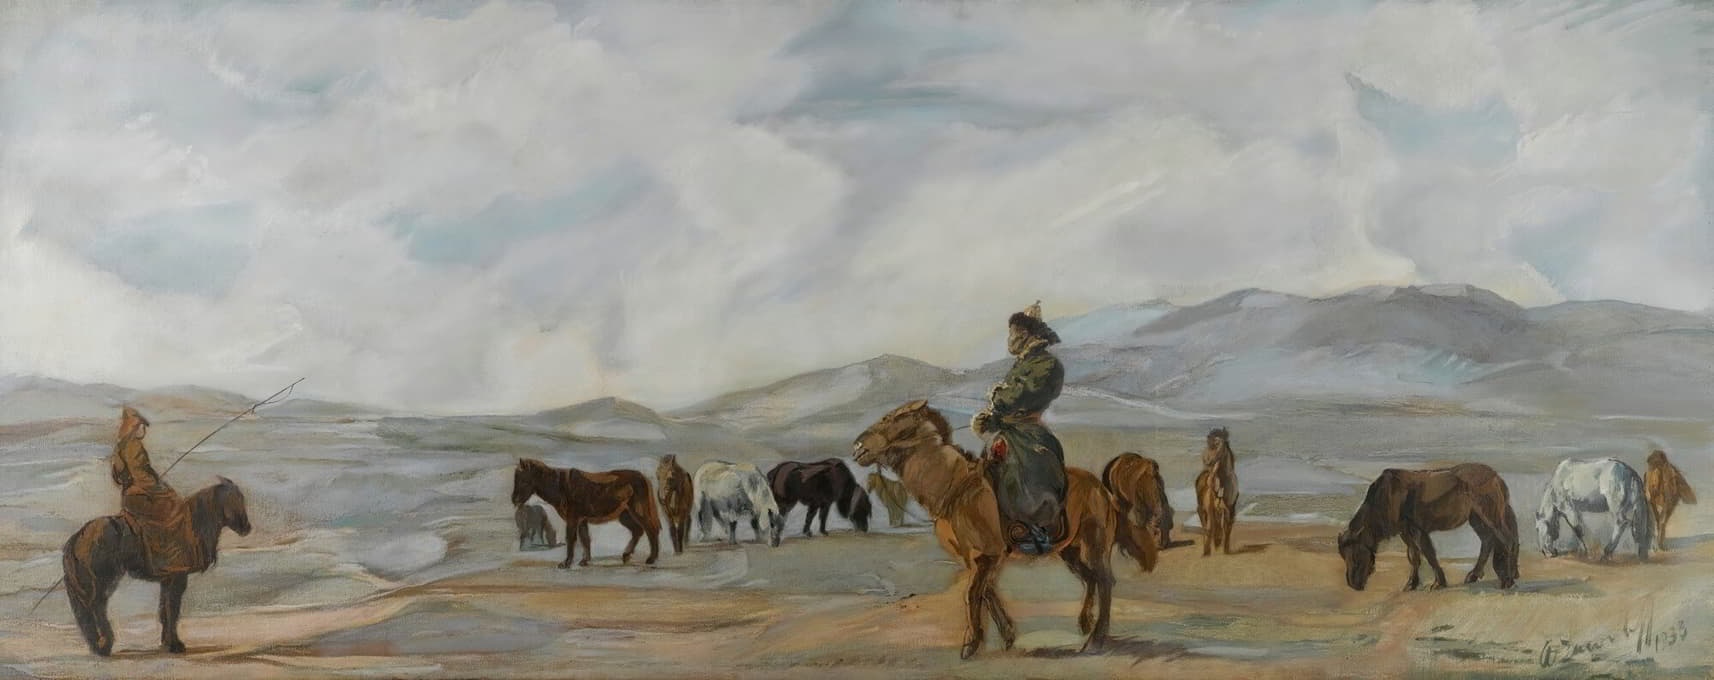 Alexander Evgenievich Yakovlev - Mongolian Horsemen